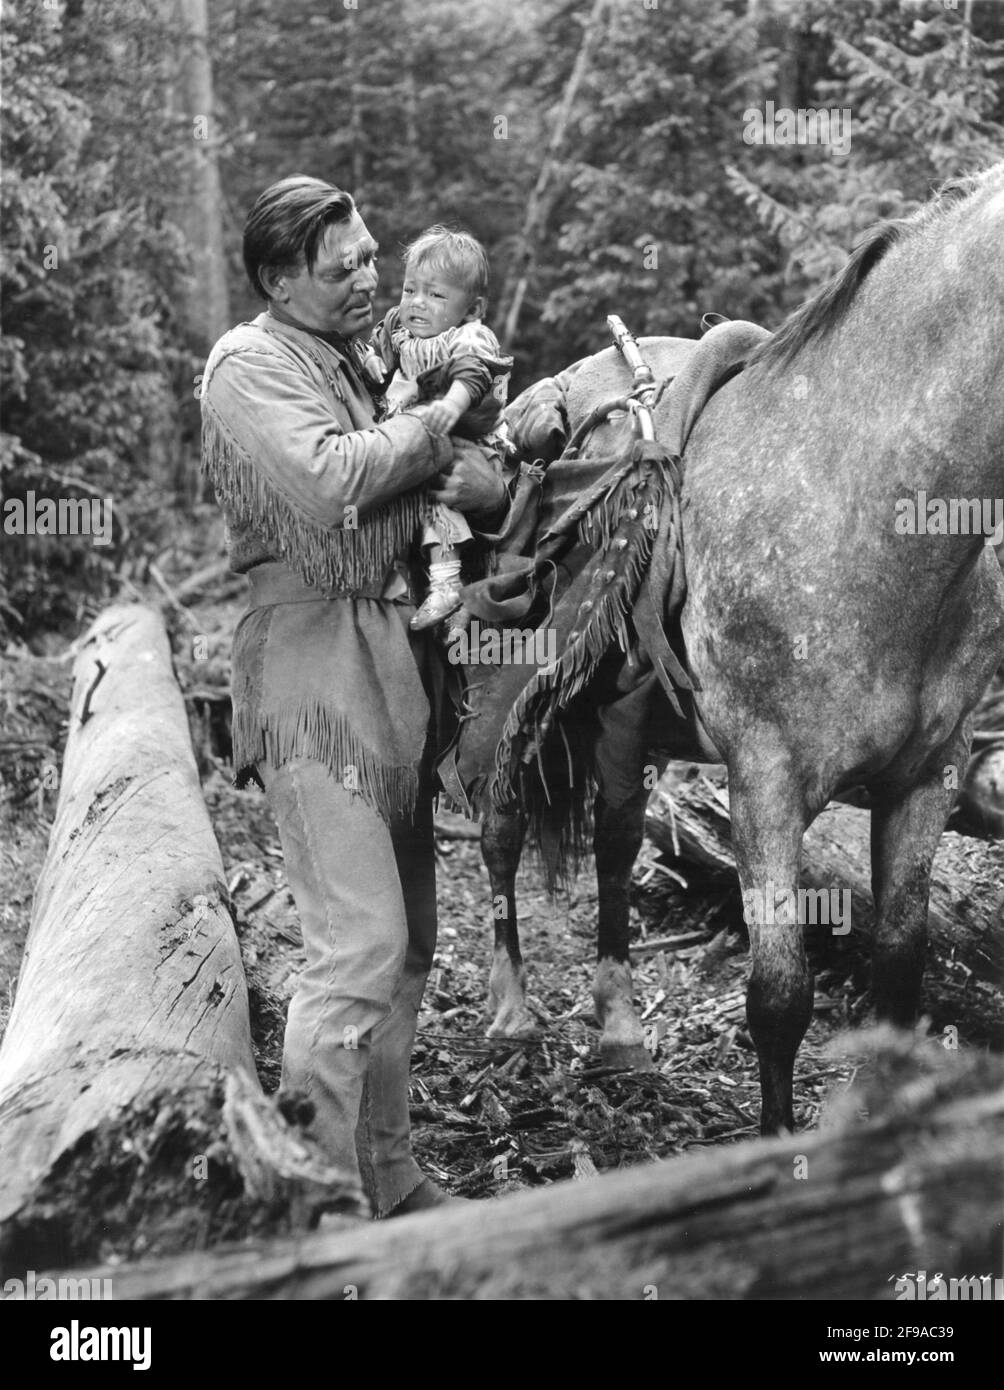 CLARK GABLE and Baby in ACROSS THE WIDE MISSOURI 1951 director WILLIAM A. WELLMAN screenplay Talbot Jennings book Bernard DeVoto Metro Goldwyn Mayer Stock Photo